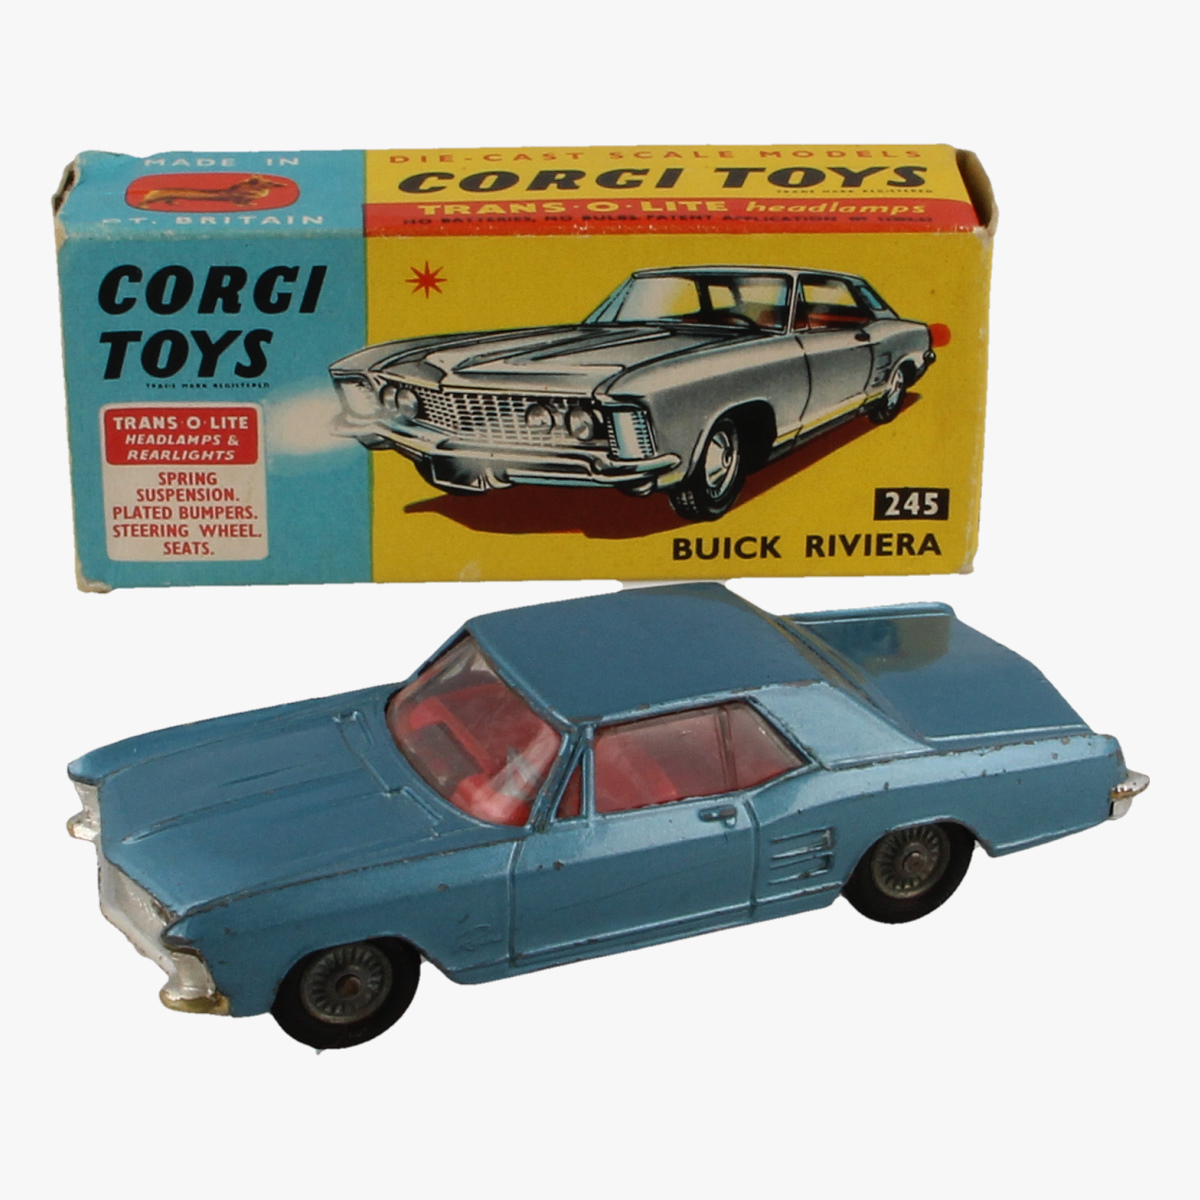 Afbeeldingen van Corgi Toys. Buick Riviera. Nr.245